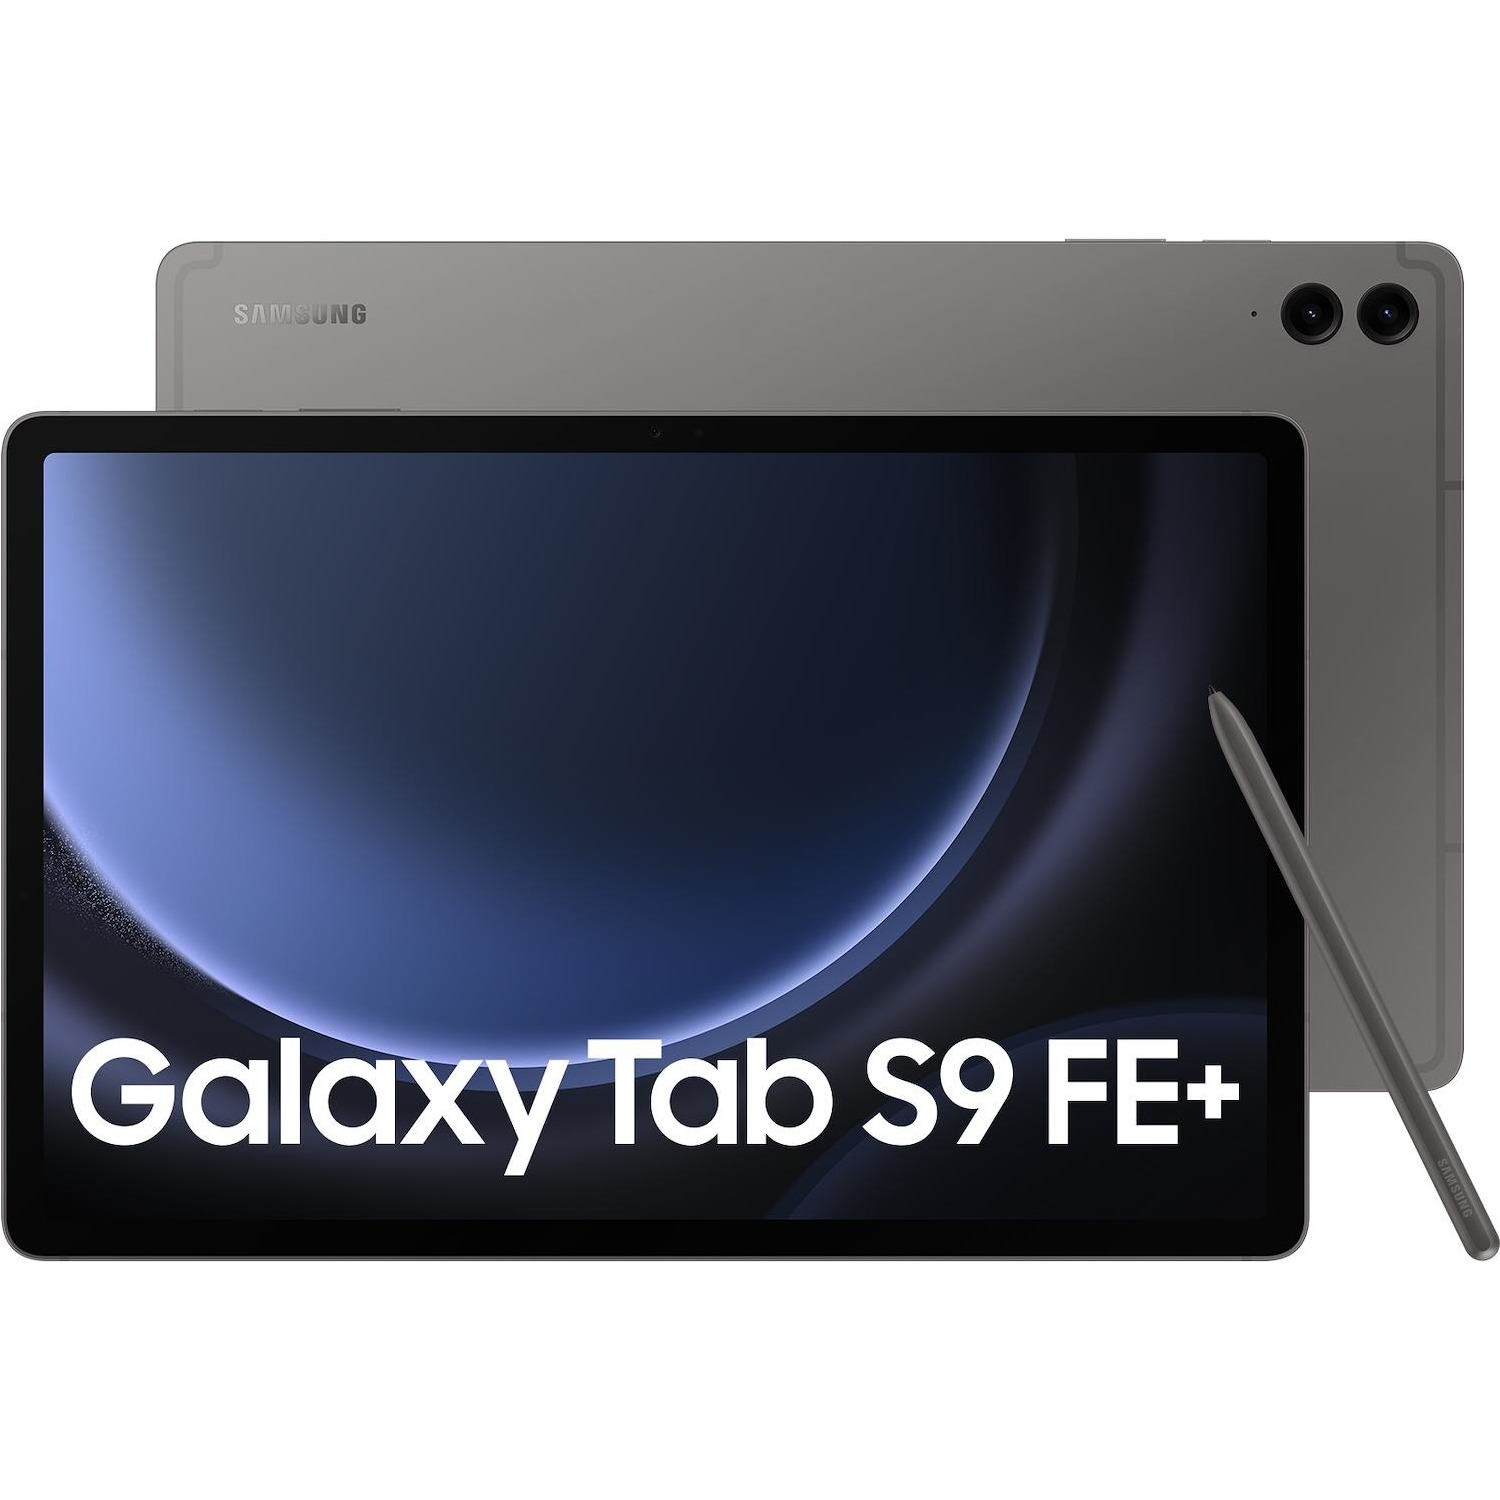 Immagine per Tablet Samsung Galaxy Tab S9 FE+ da DIMOStore